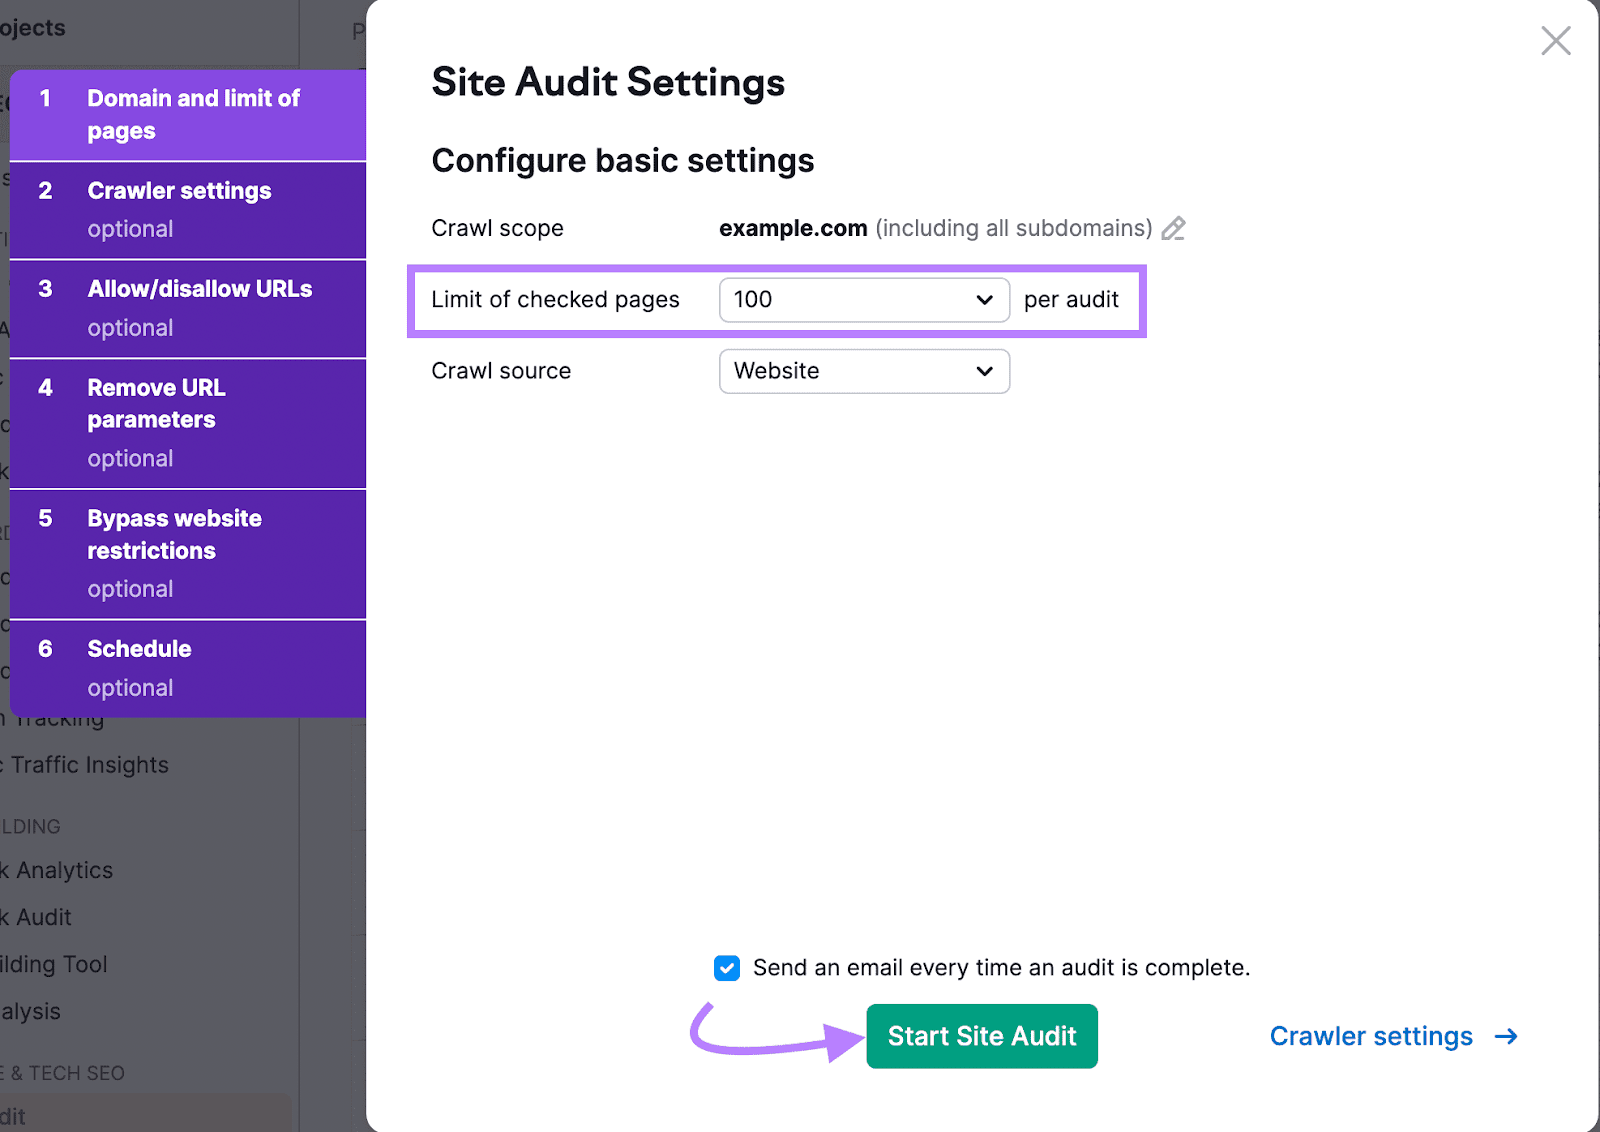 "Site Audit Settings" window